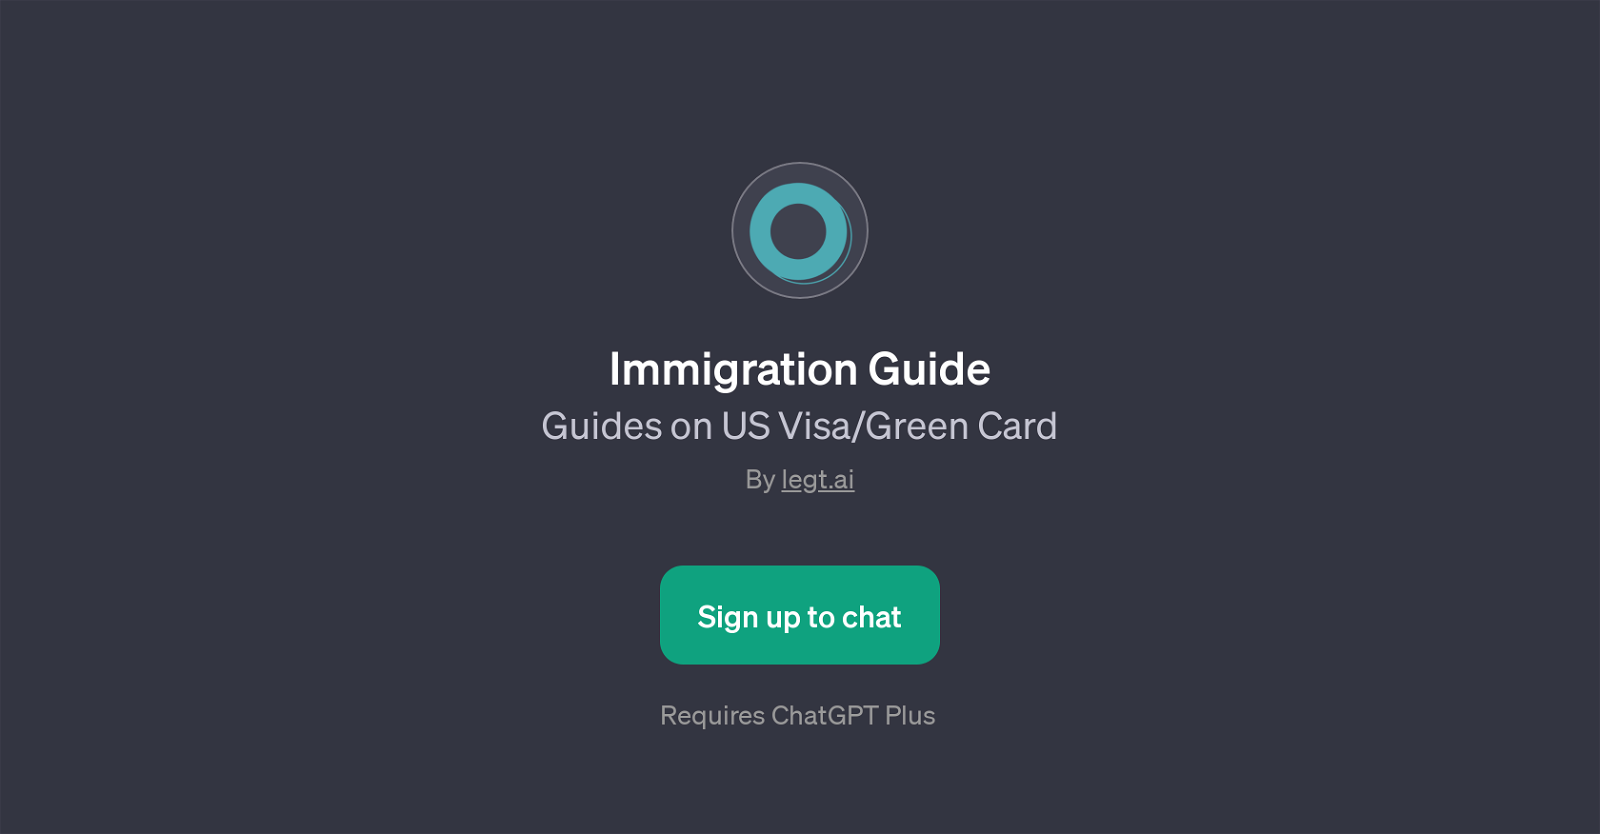 Immigration Guide website